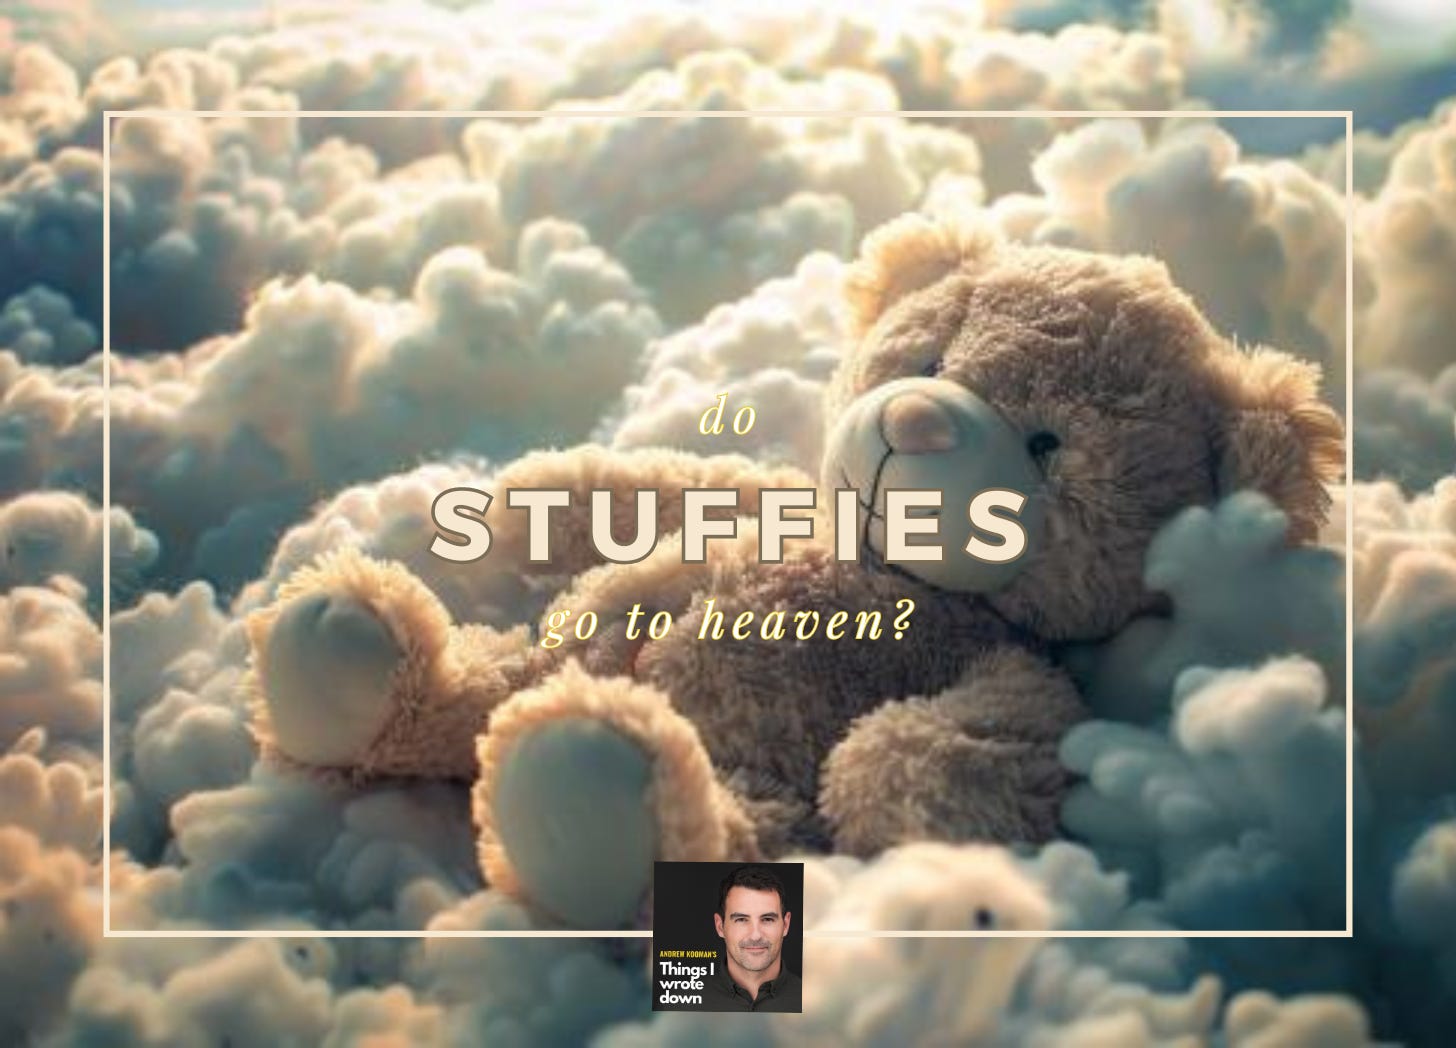 Do stuffies go to heaven? Andrew Kooman